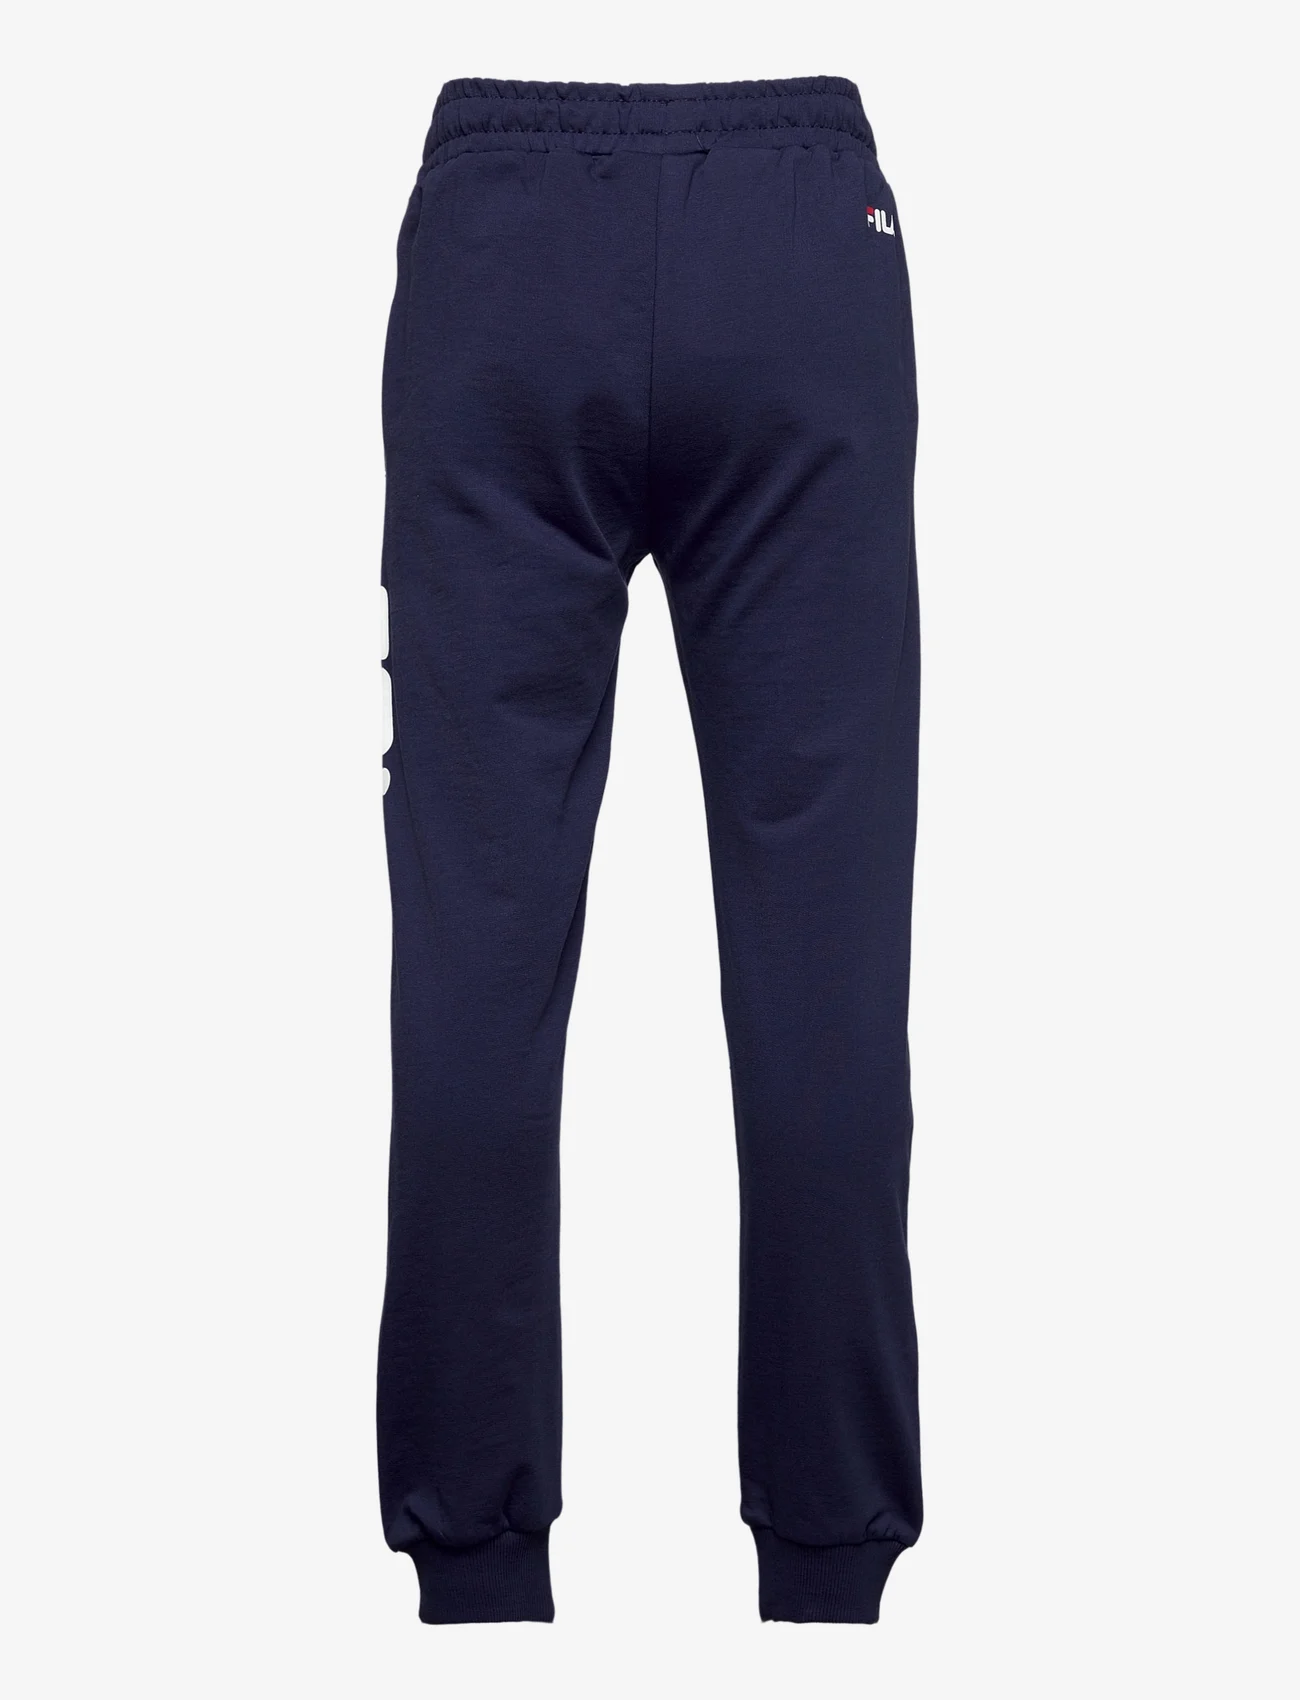 FILA - CISTA PROVO jogg pants - sports bottoms - medieval blue - 1